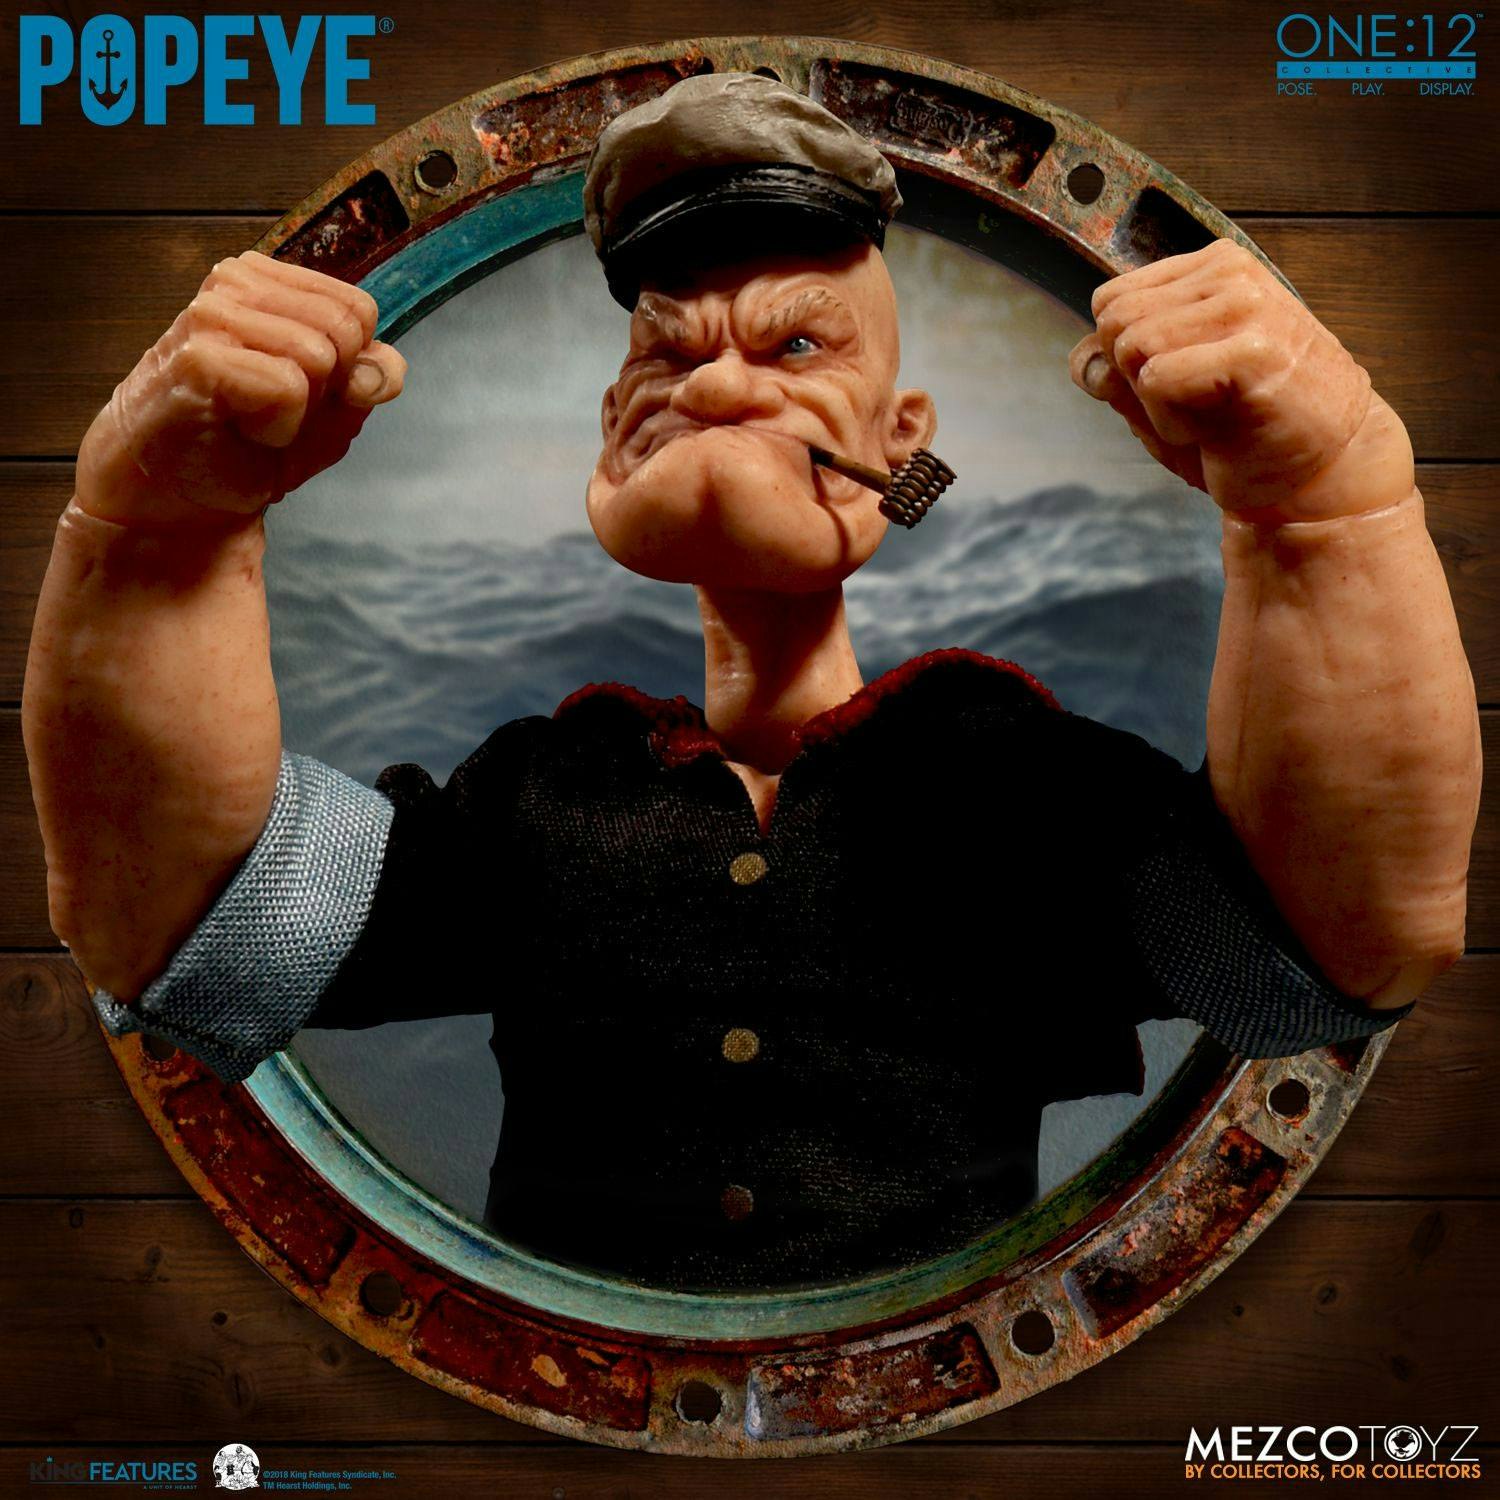 Popeye One:12 Collective Popeye